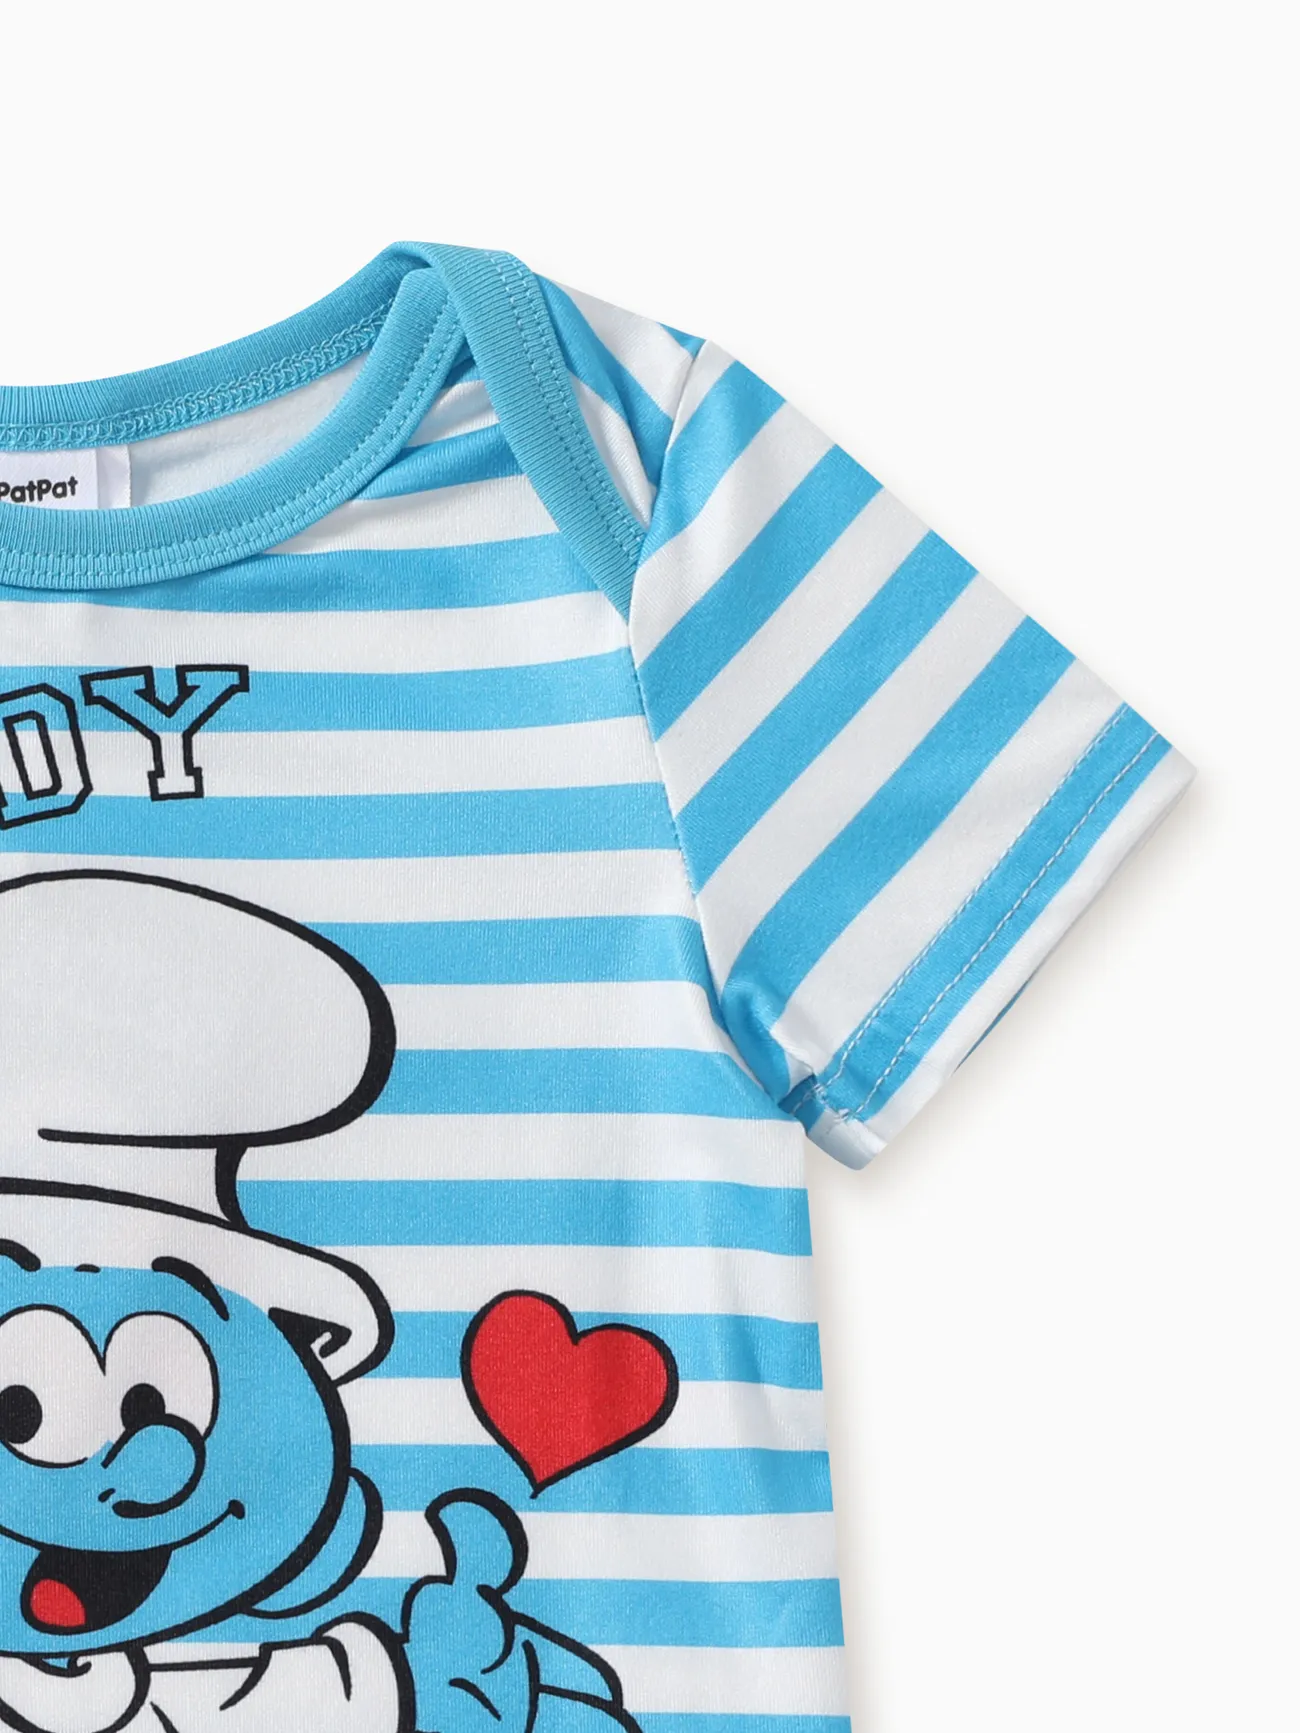 The Smurfs Baby Boys 1pc Cotton Character Stripe Print Short-sleeve Romper Blue big image 1